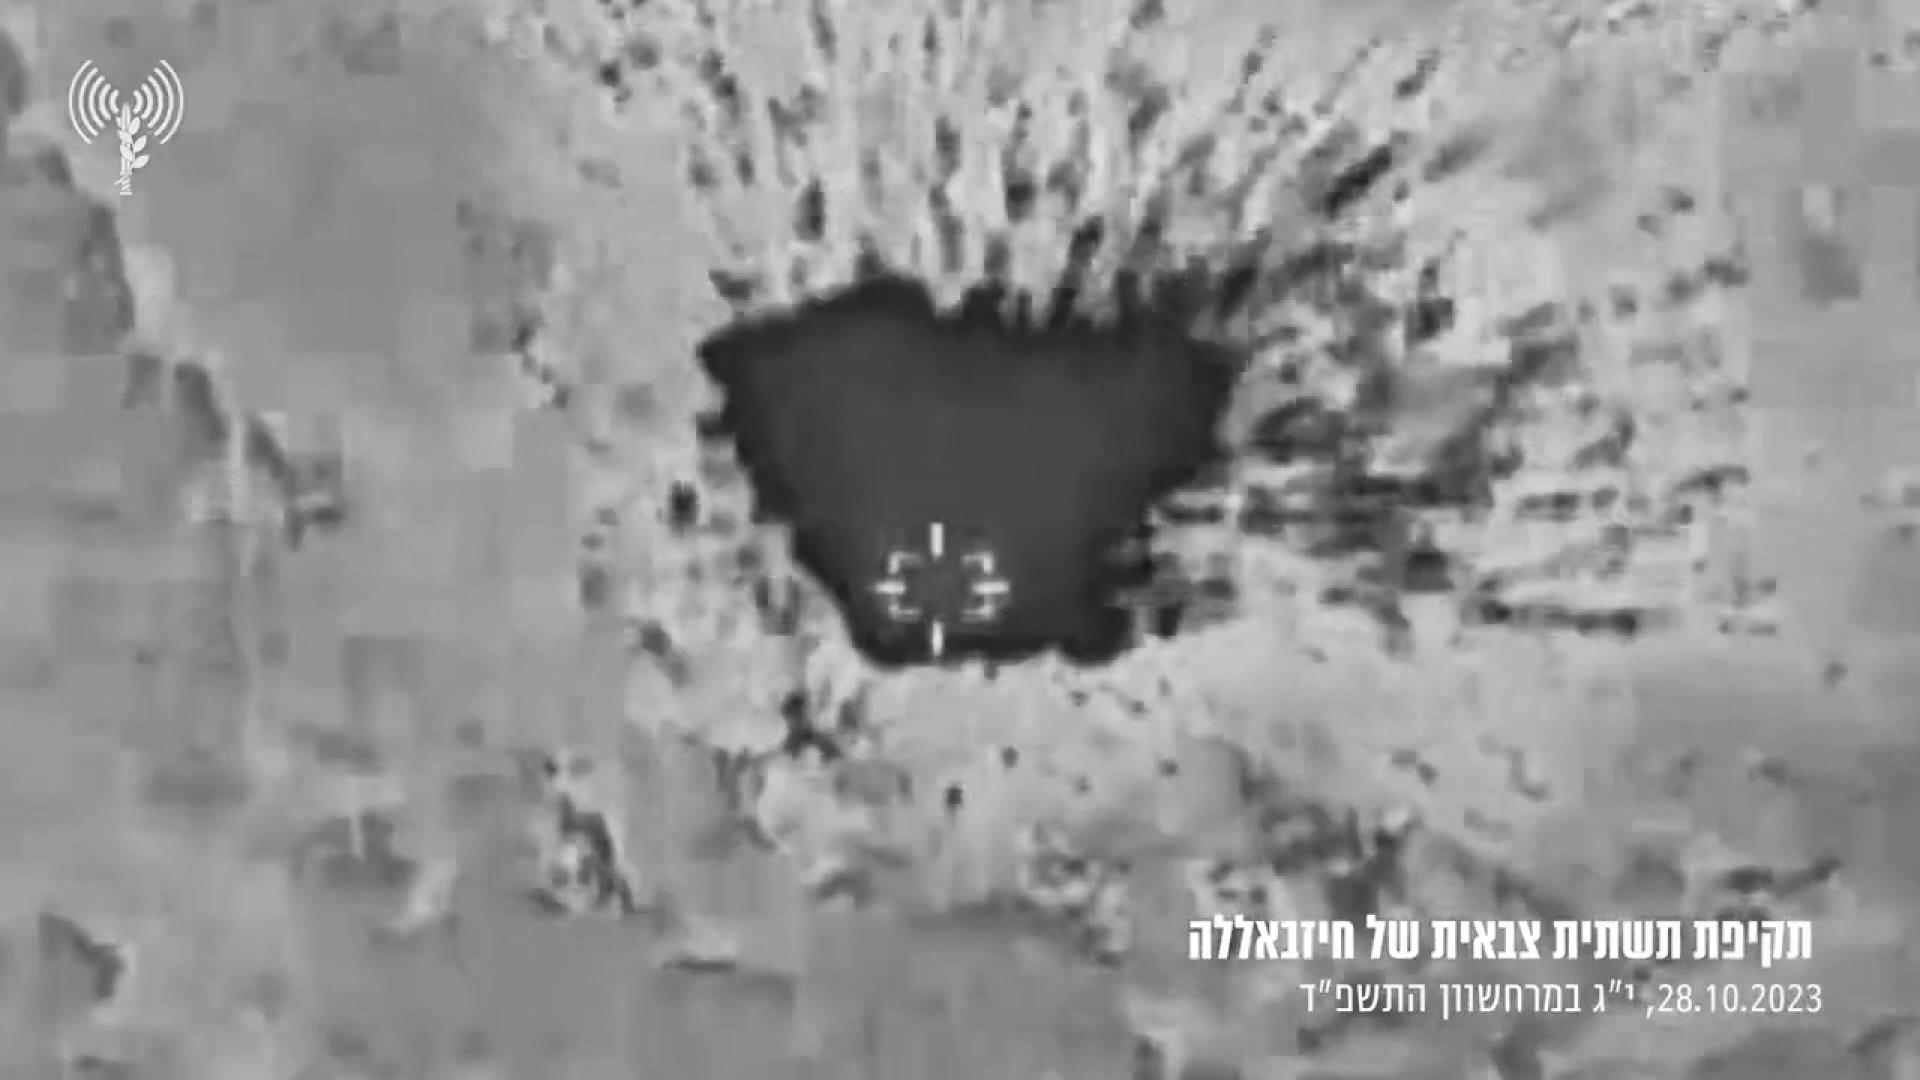 israil-hava-kuvvetleri-lubnanda-hizbullaha-ait-hedefler-vuruldu-4349-dhaphoto1.jpg